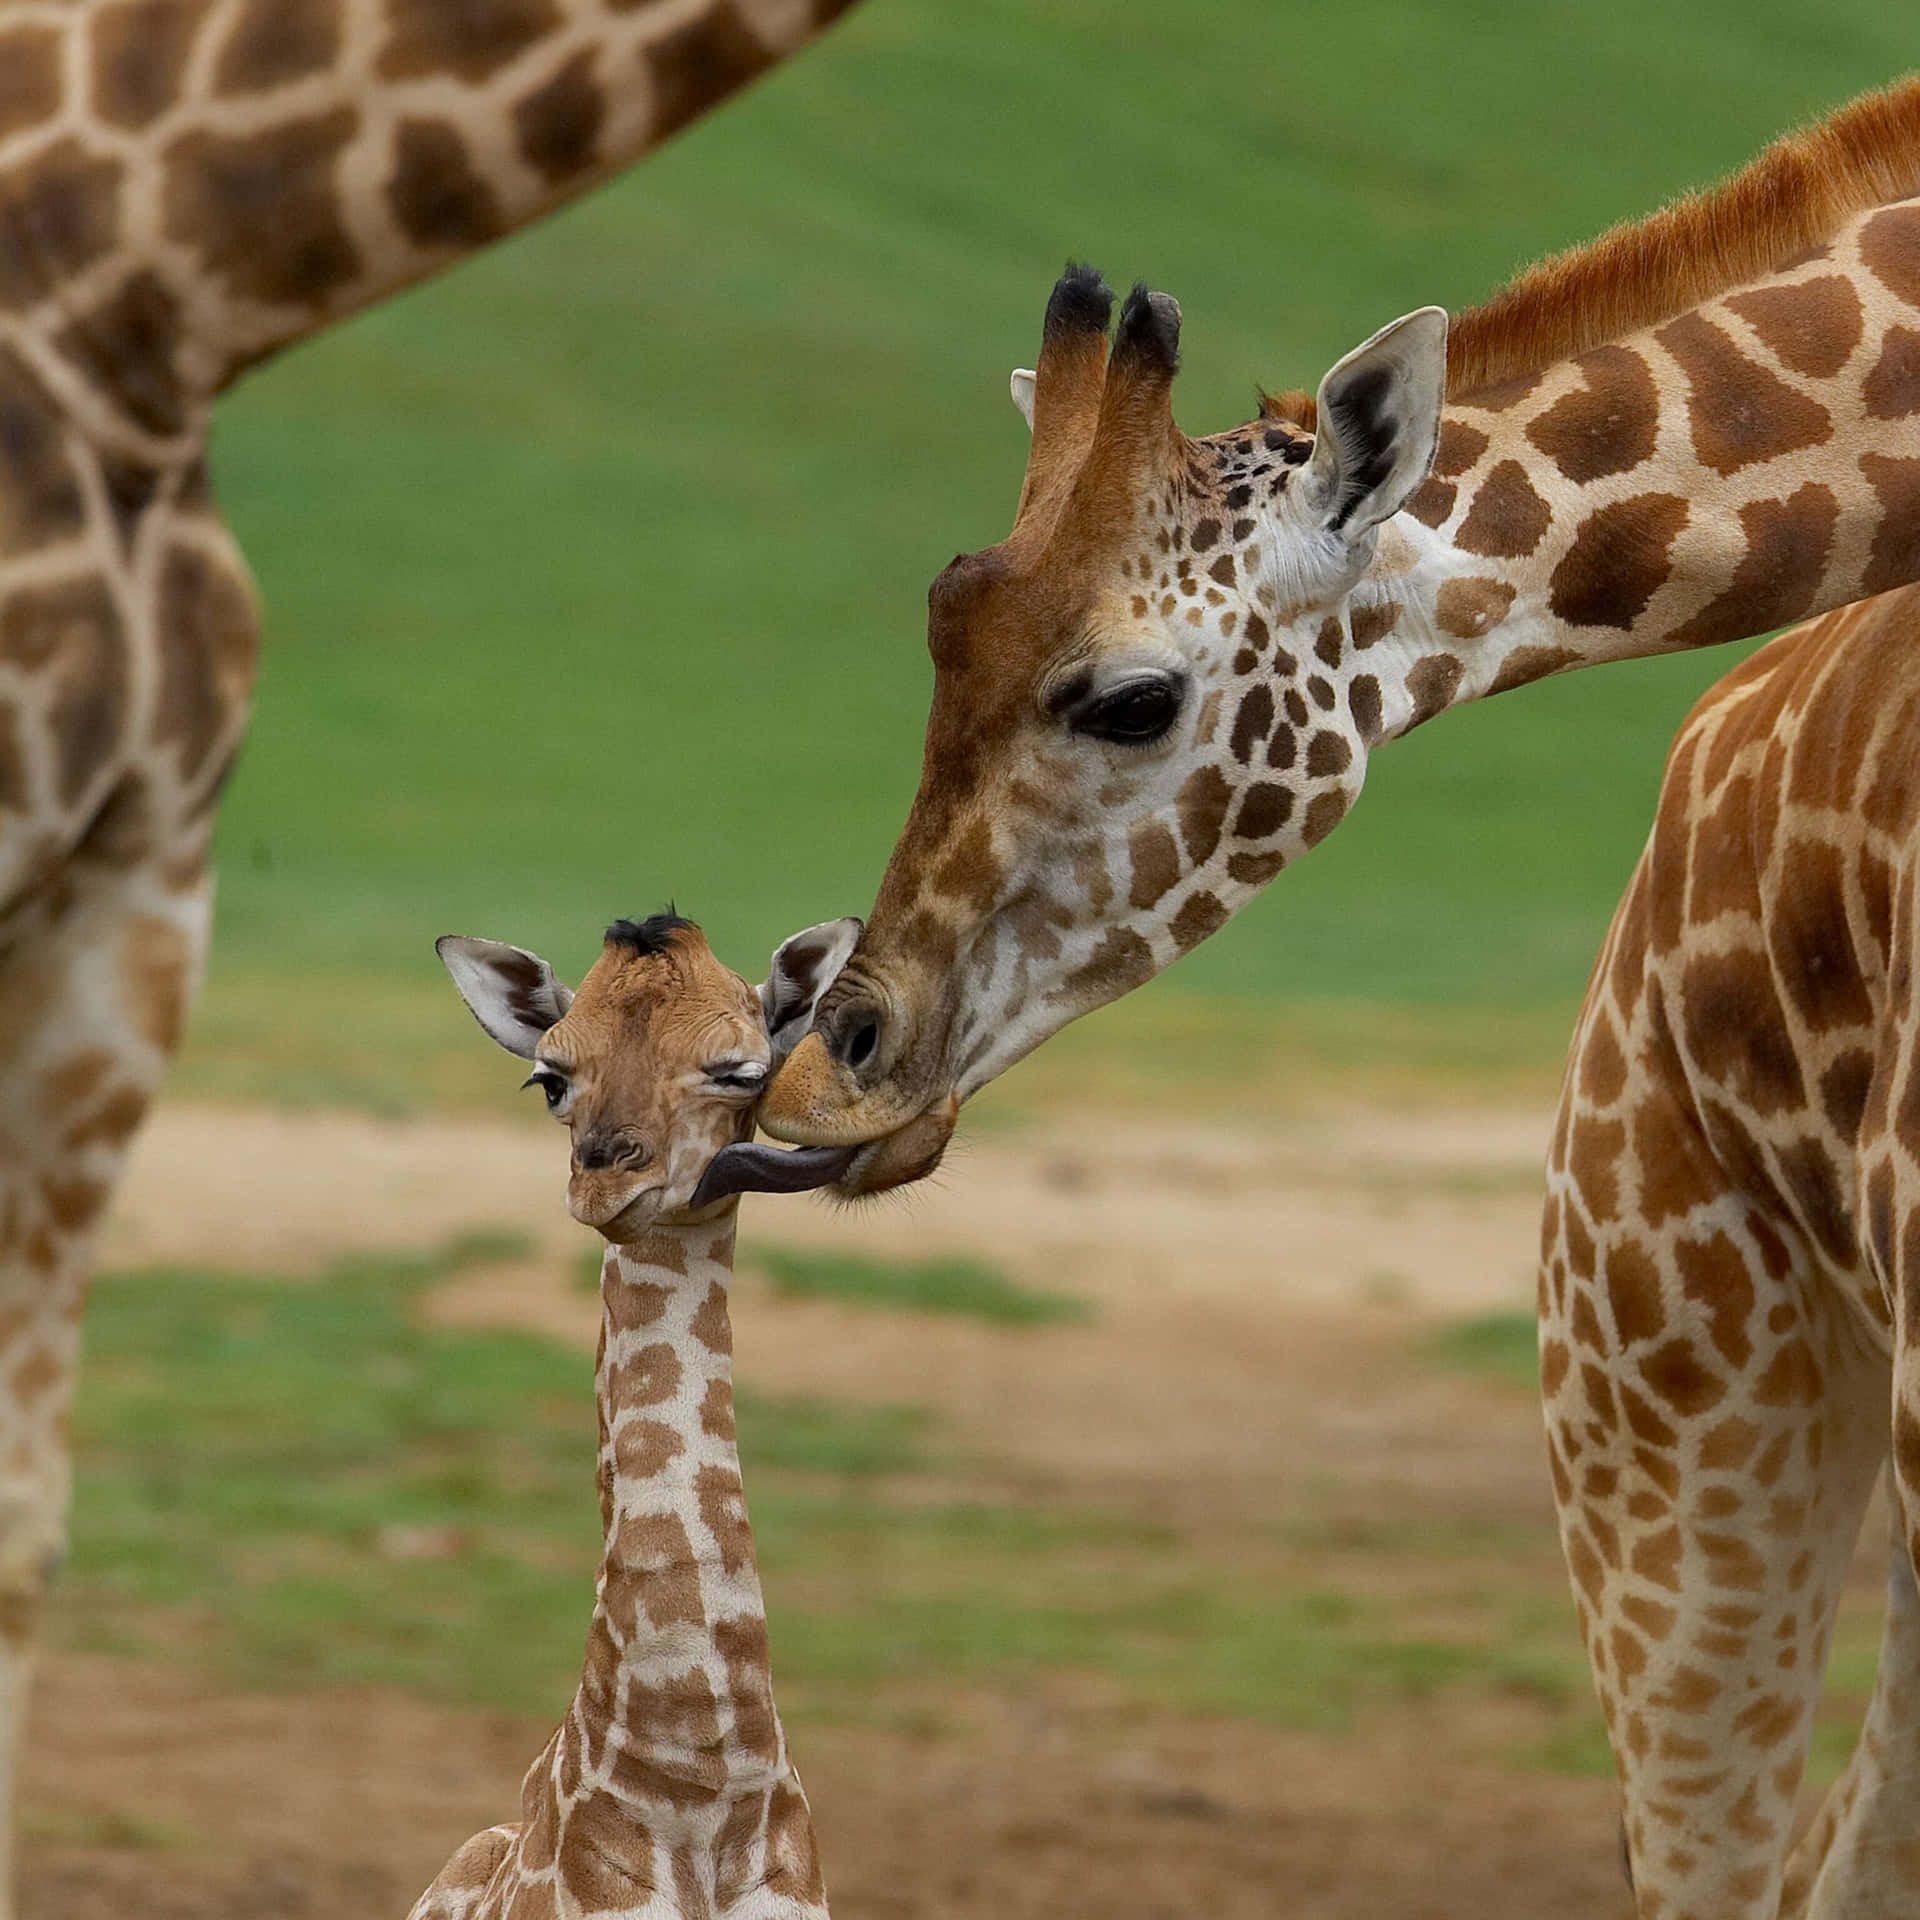 A Giraffe With A Baby